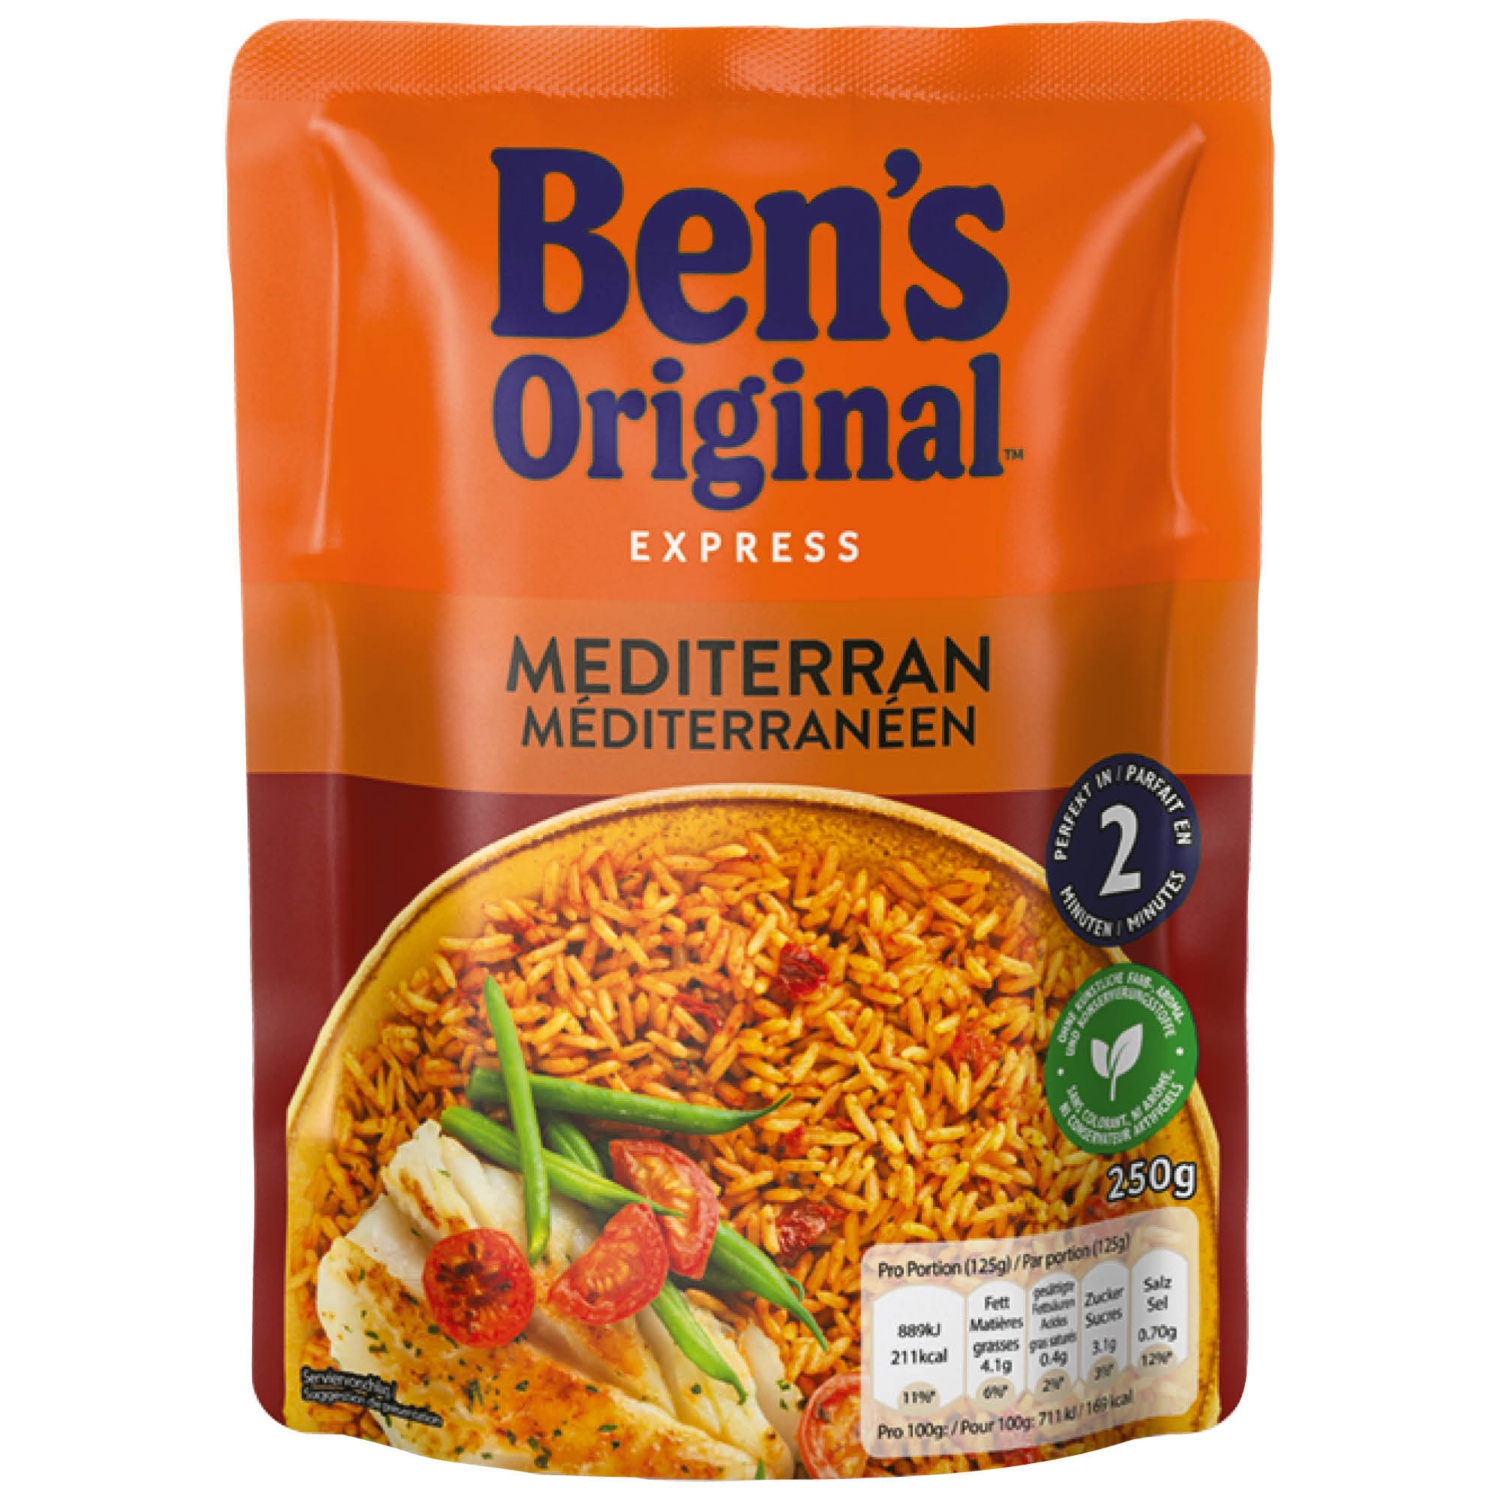 BEN'S ORIGINAL Bens express rice, alla mediterranea